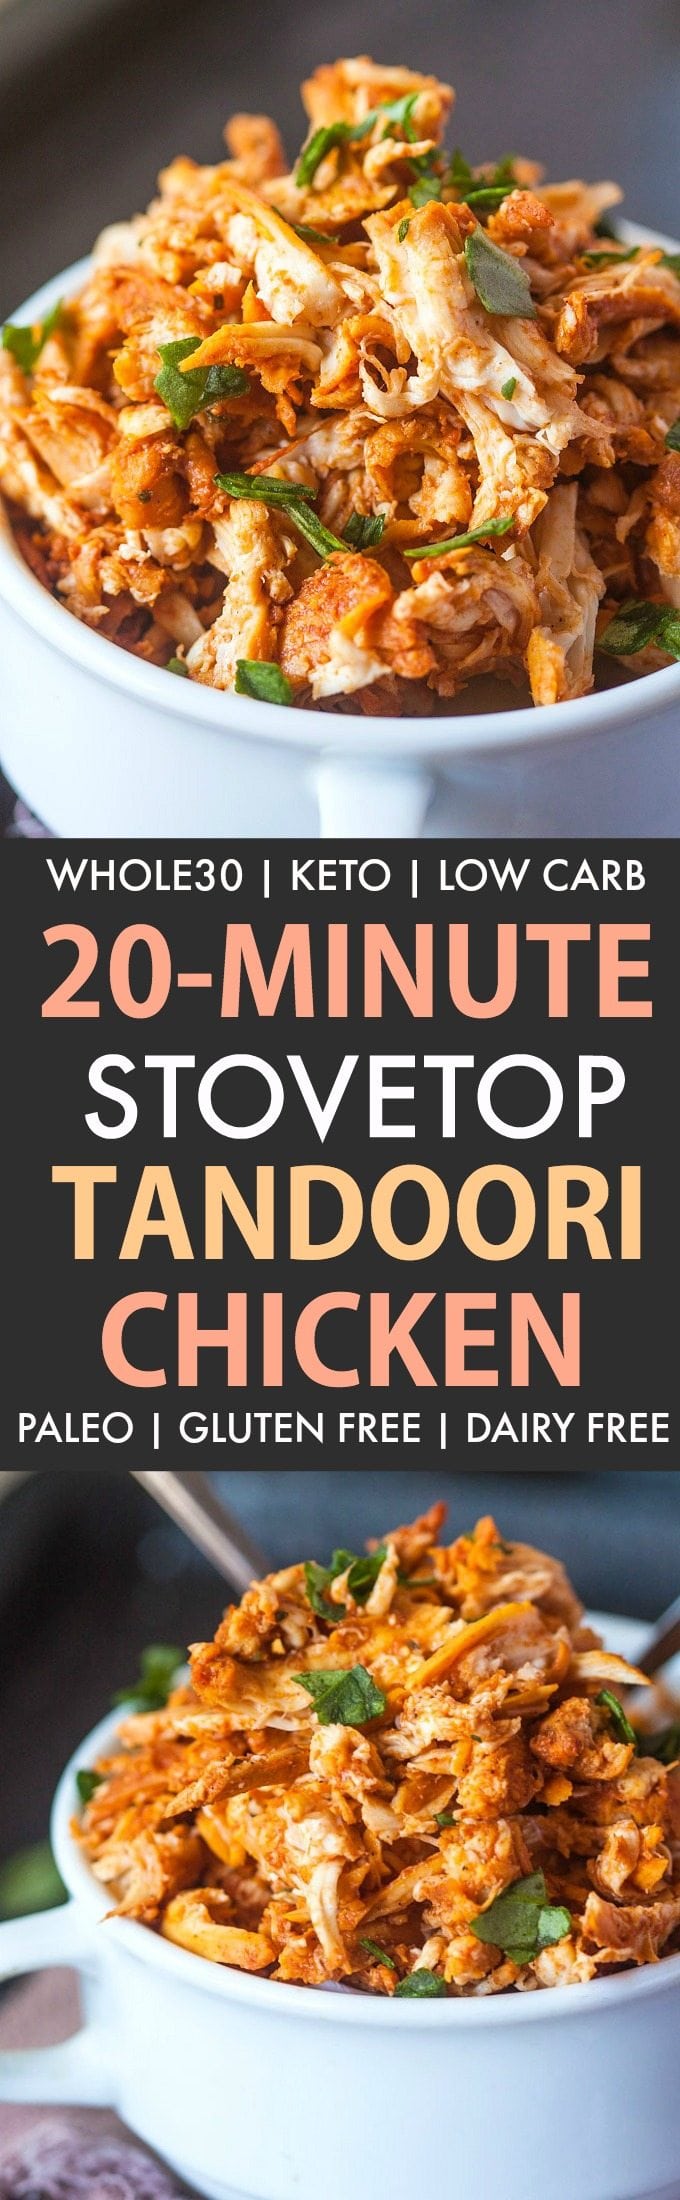 Pulled Tandoori Chicken